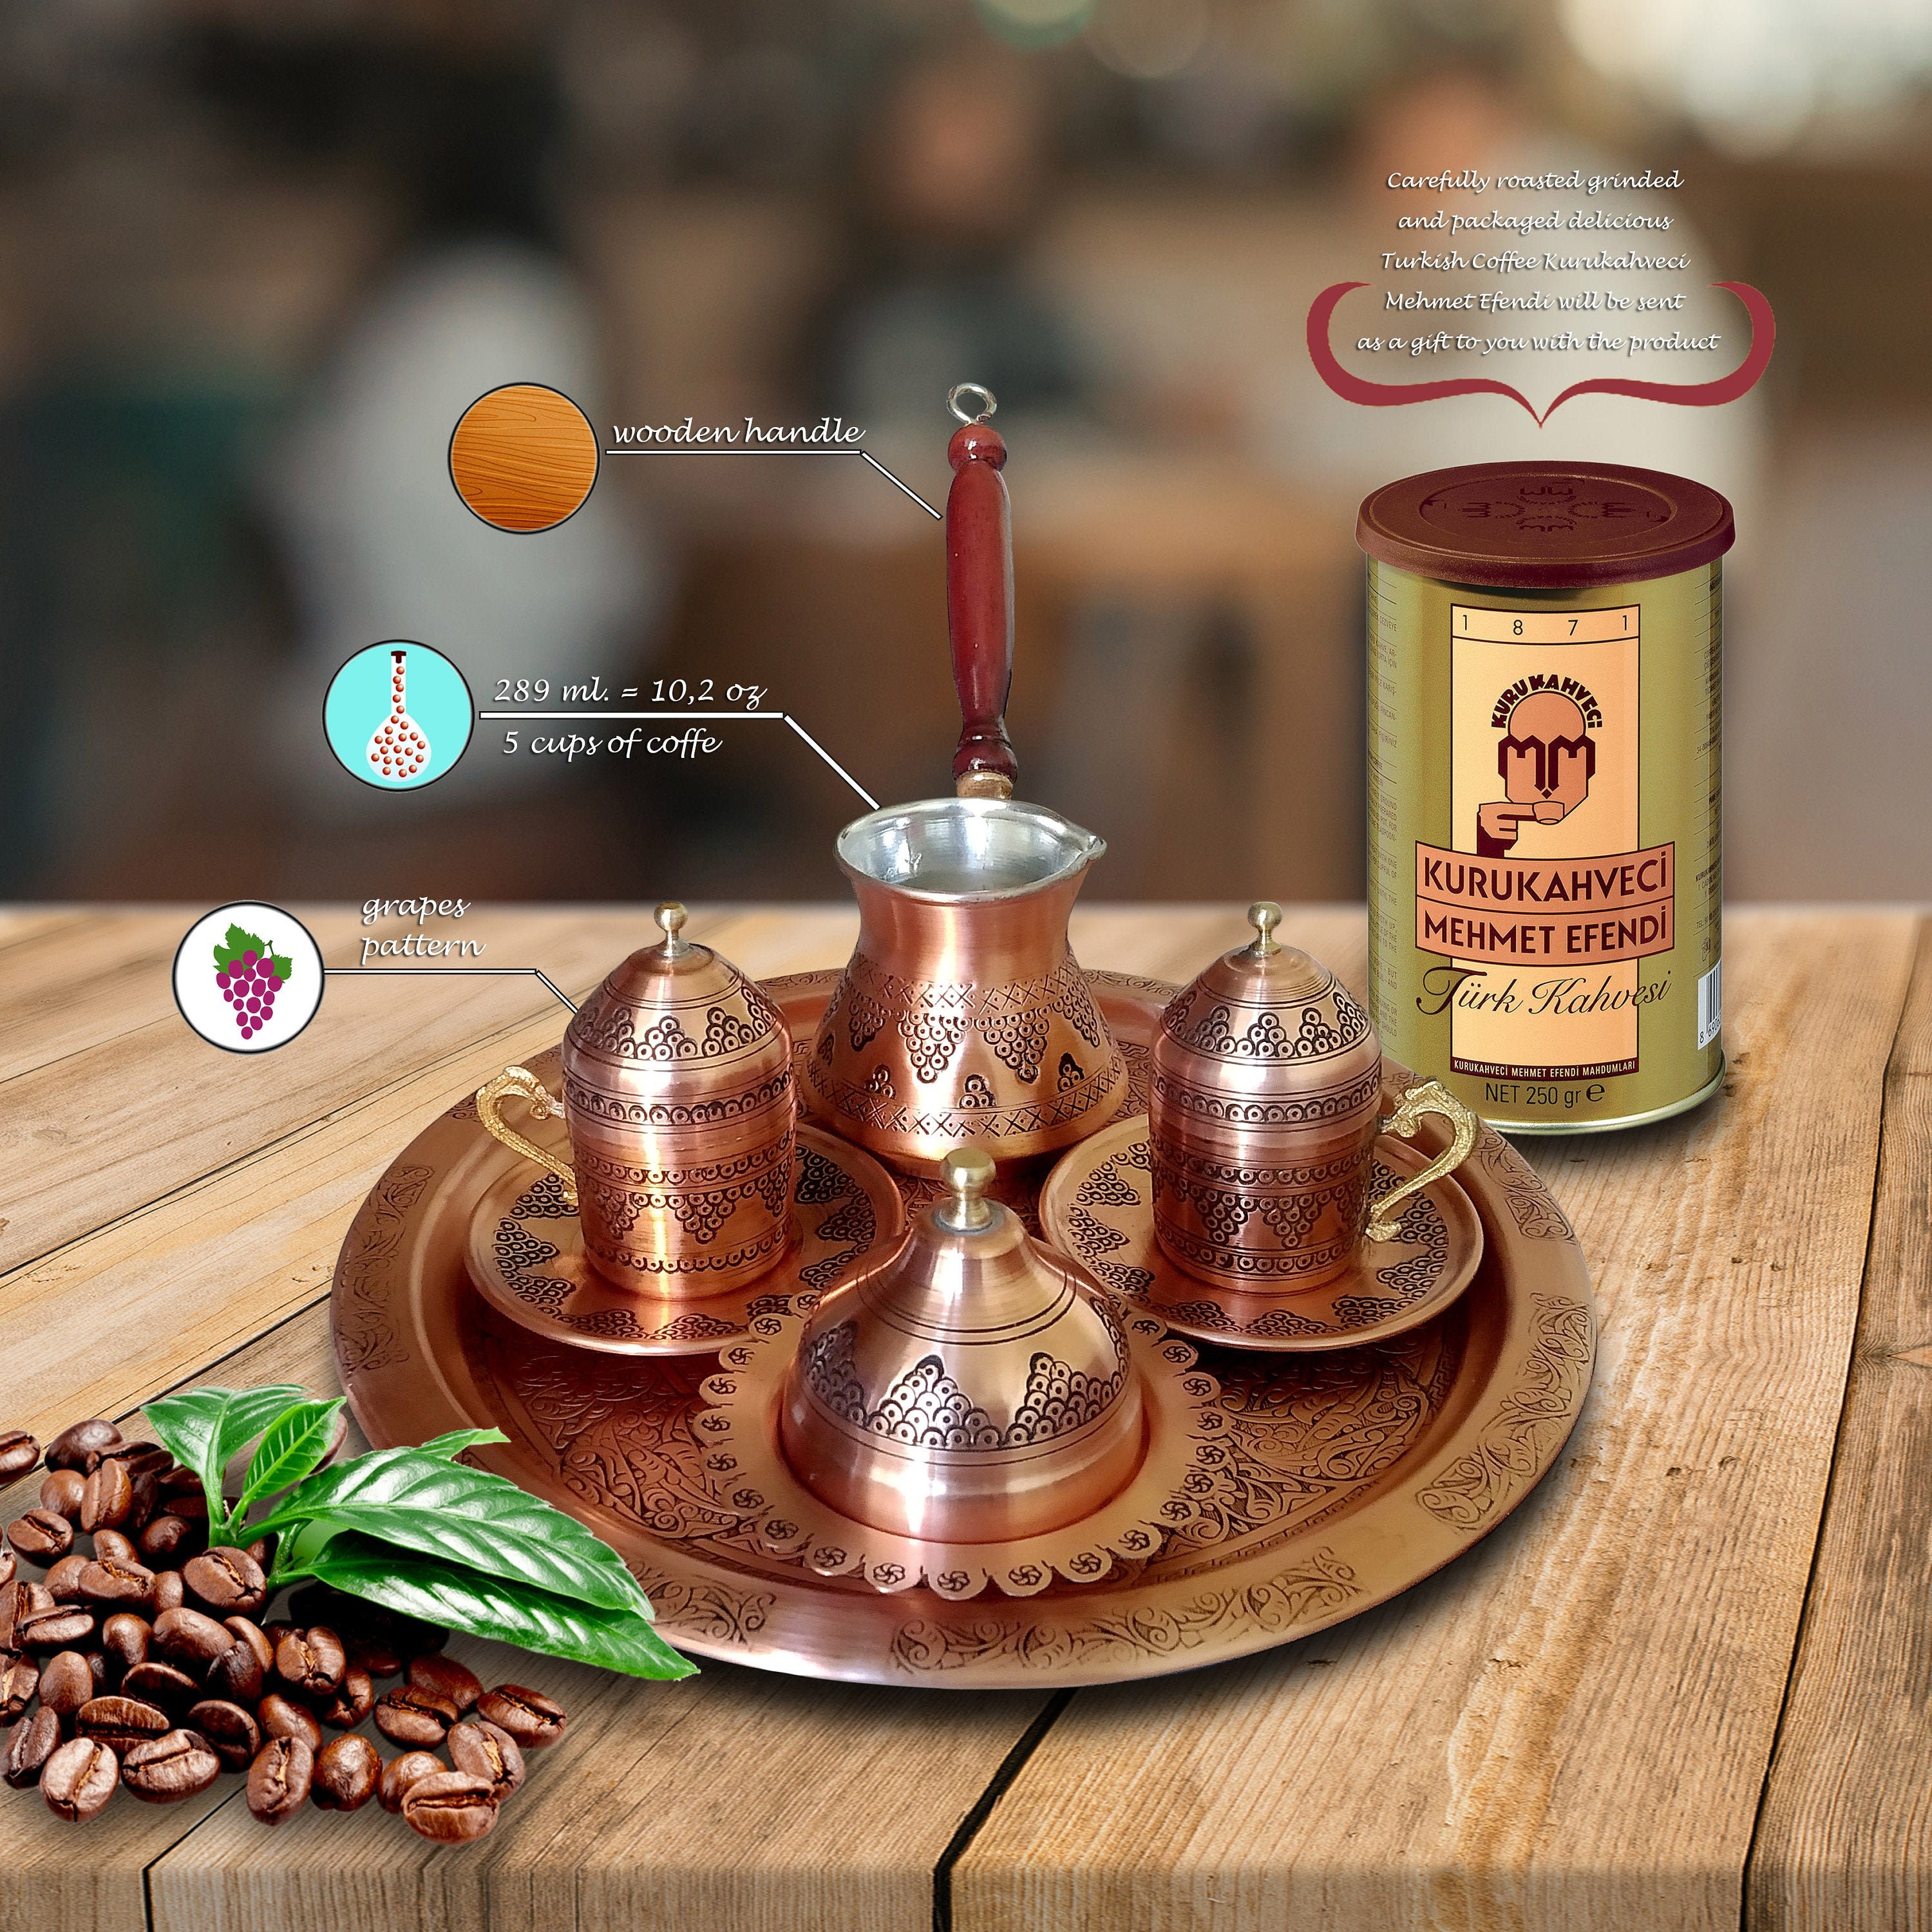 Electric Turkish Coffee Maker, Size: 6.76 fl oz, Silver